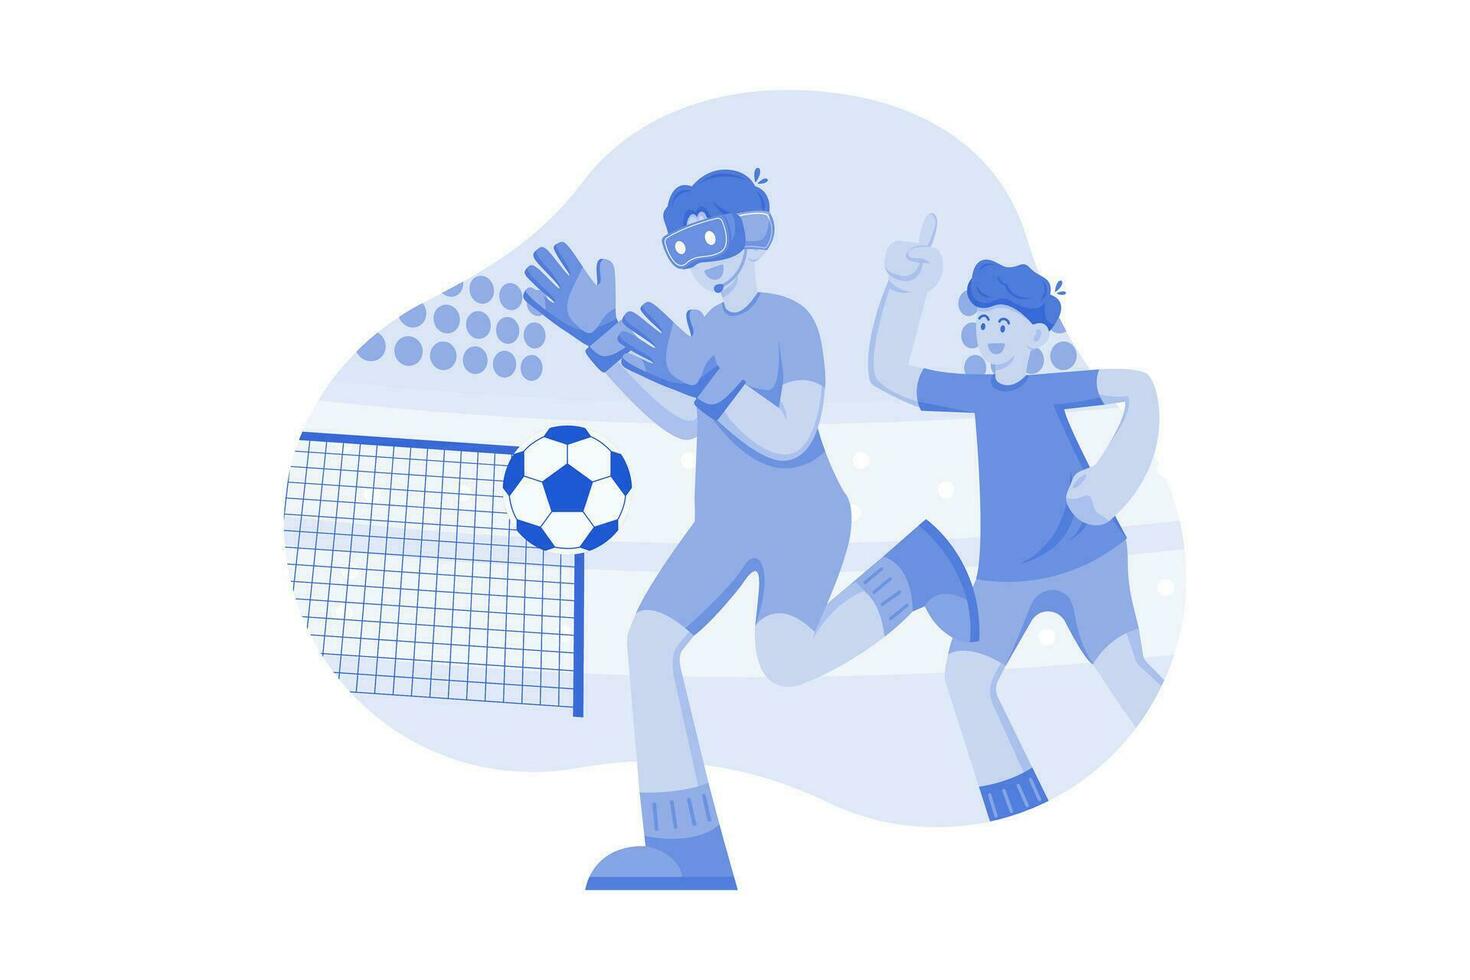 Deportes juegos virtual concepto ilustración concepto en blanco antecedentes vector